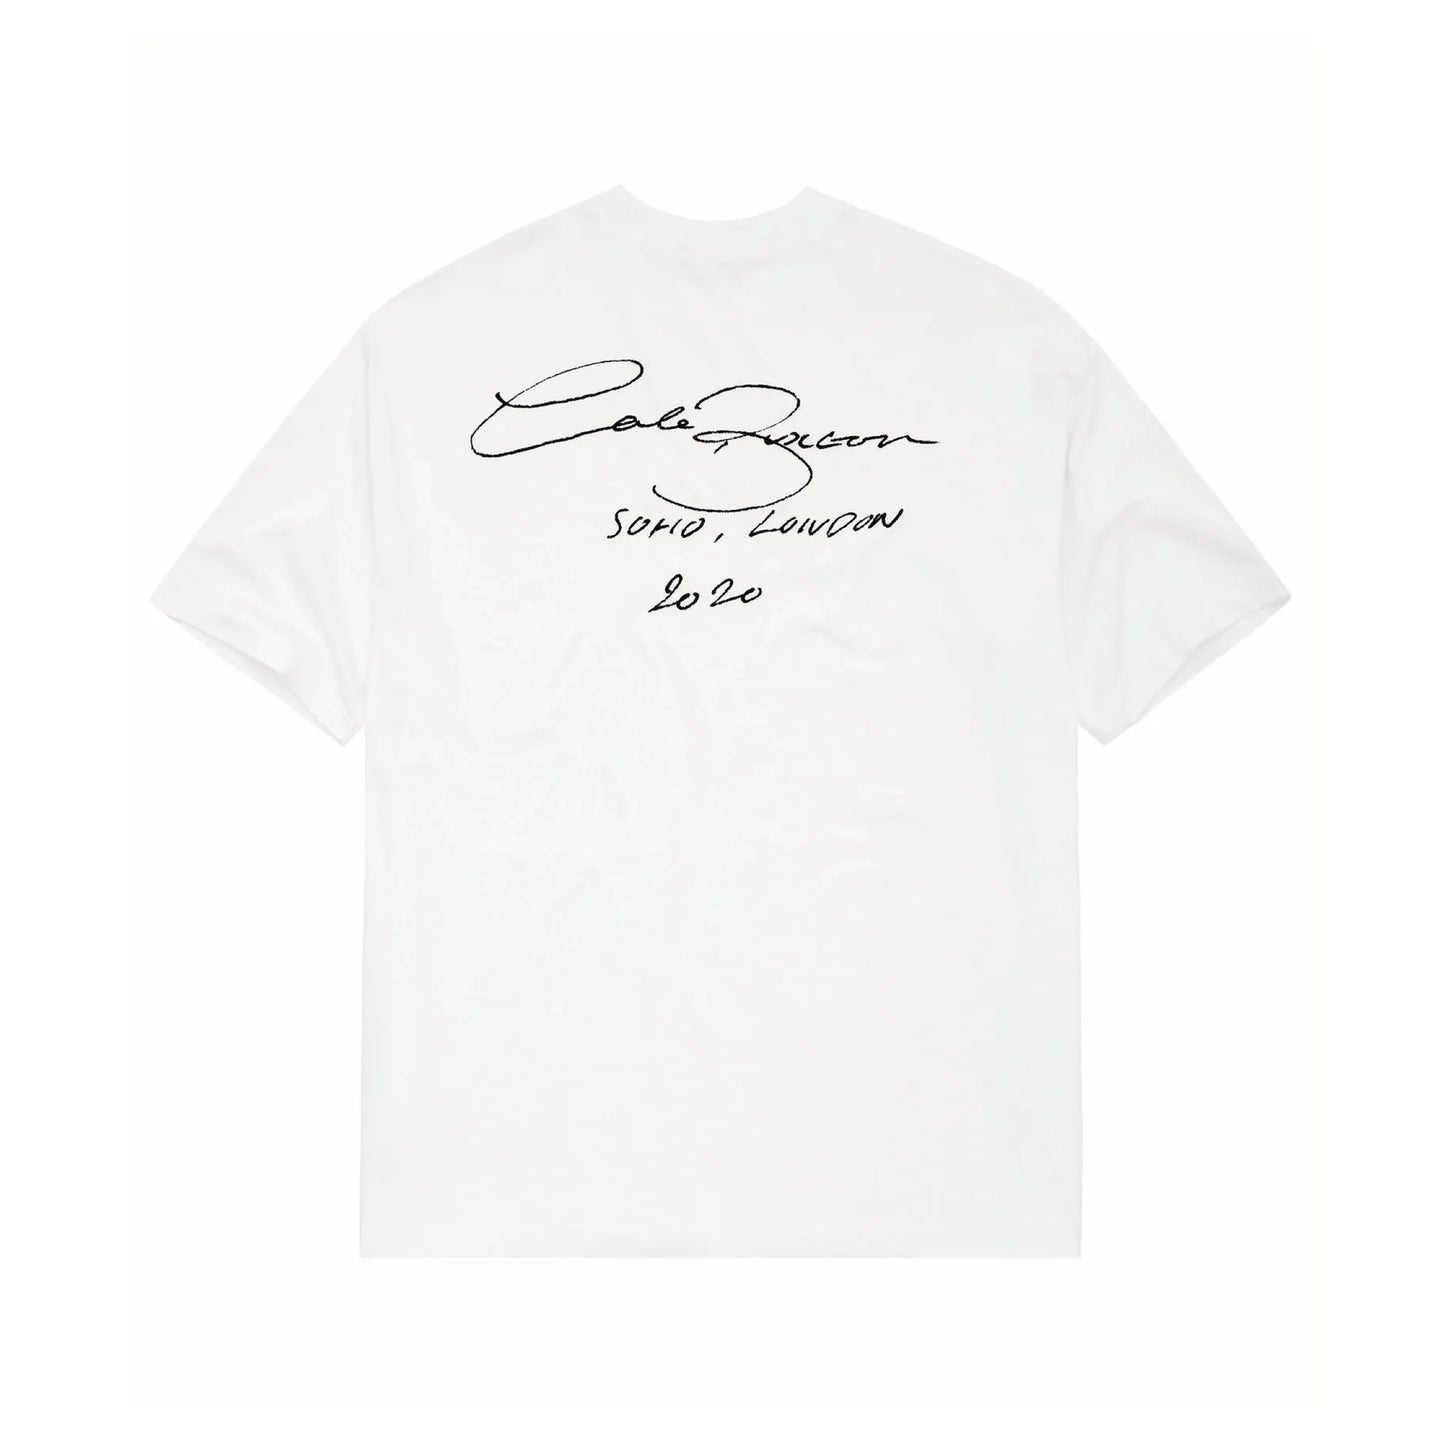 ColeBuxton Signature T-Shirt